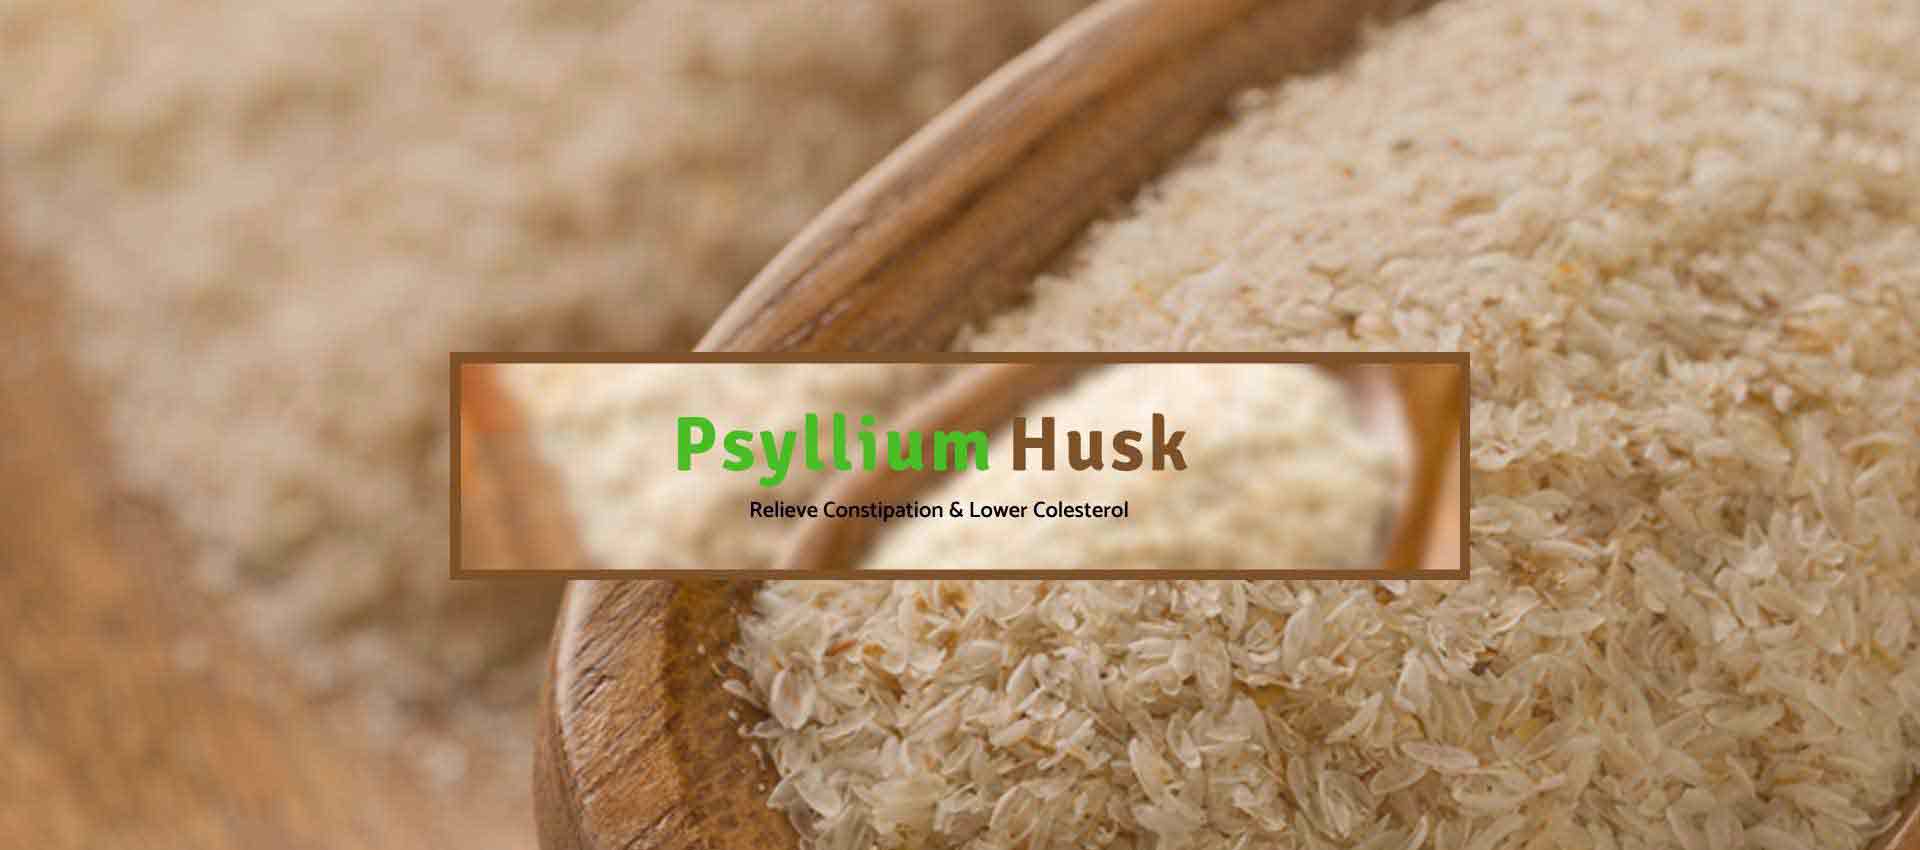 Psyllium Husk Manufacturers in Vapi